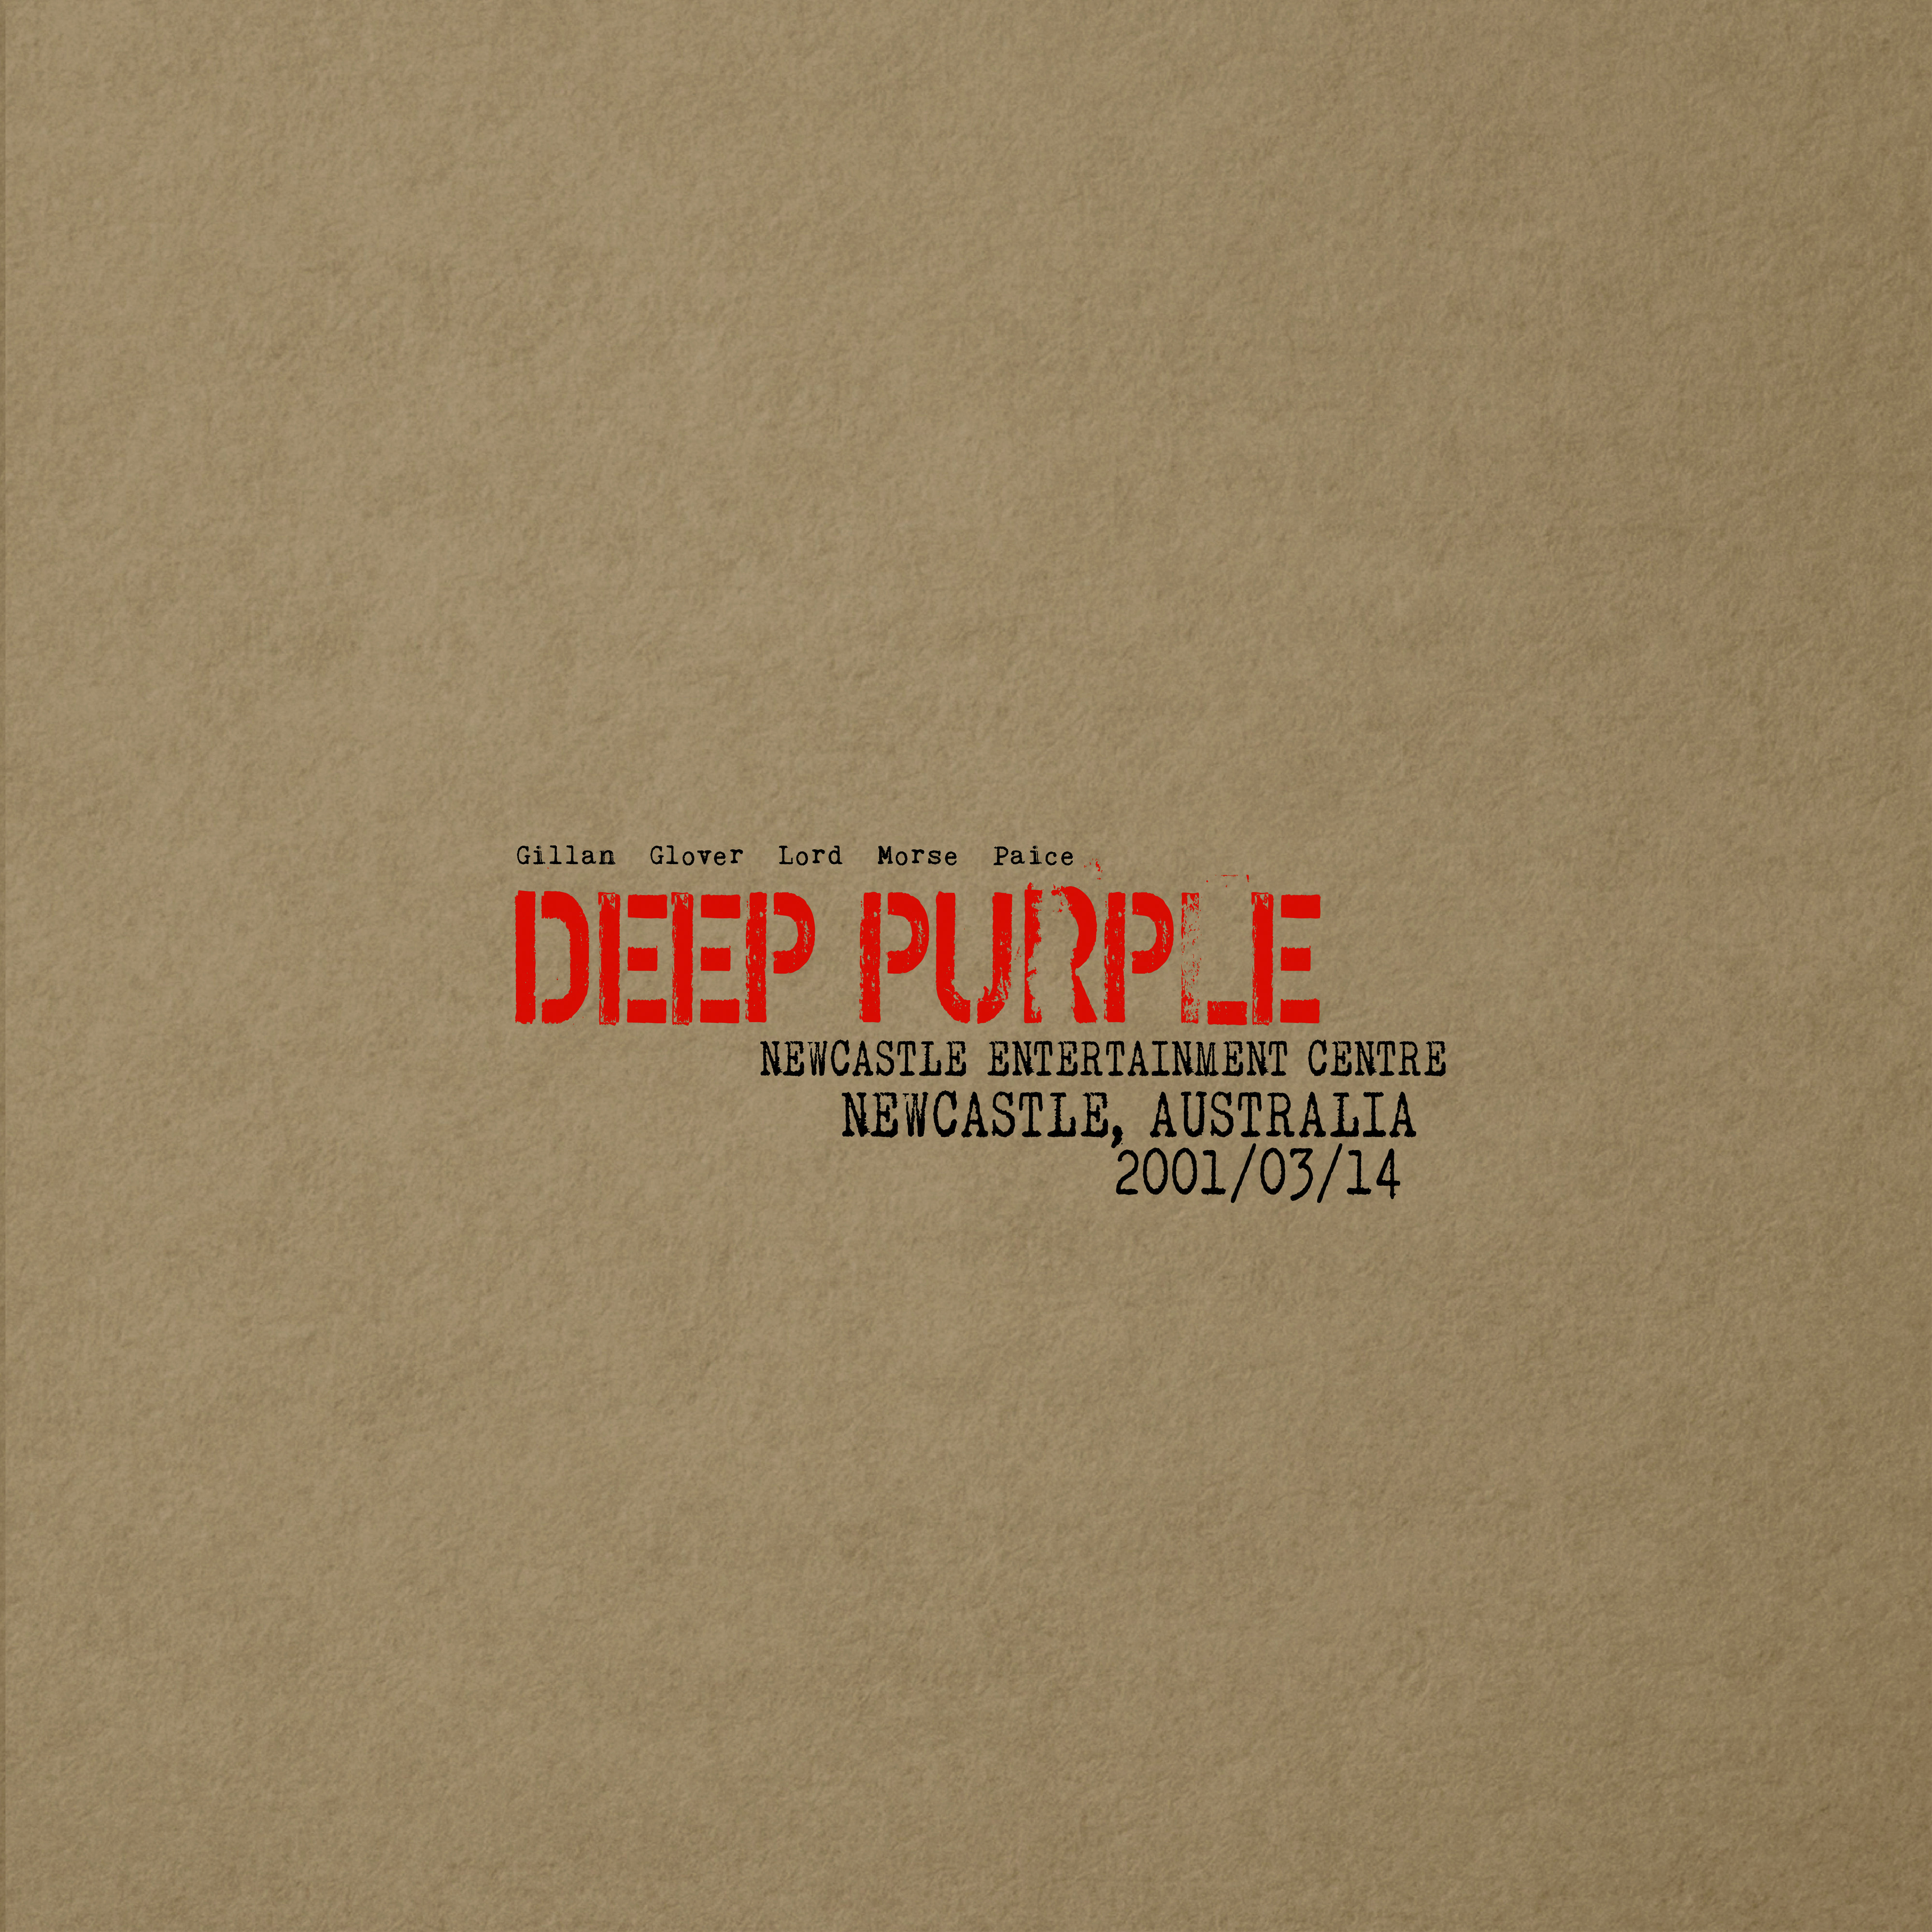 Deep Purple - Newcastle 2001 (Ltd ed numbered CD) - 2xCD